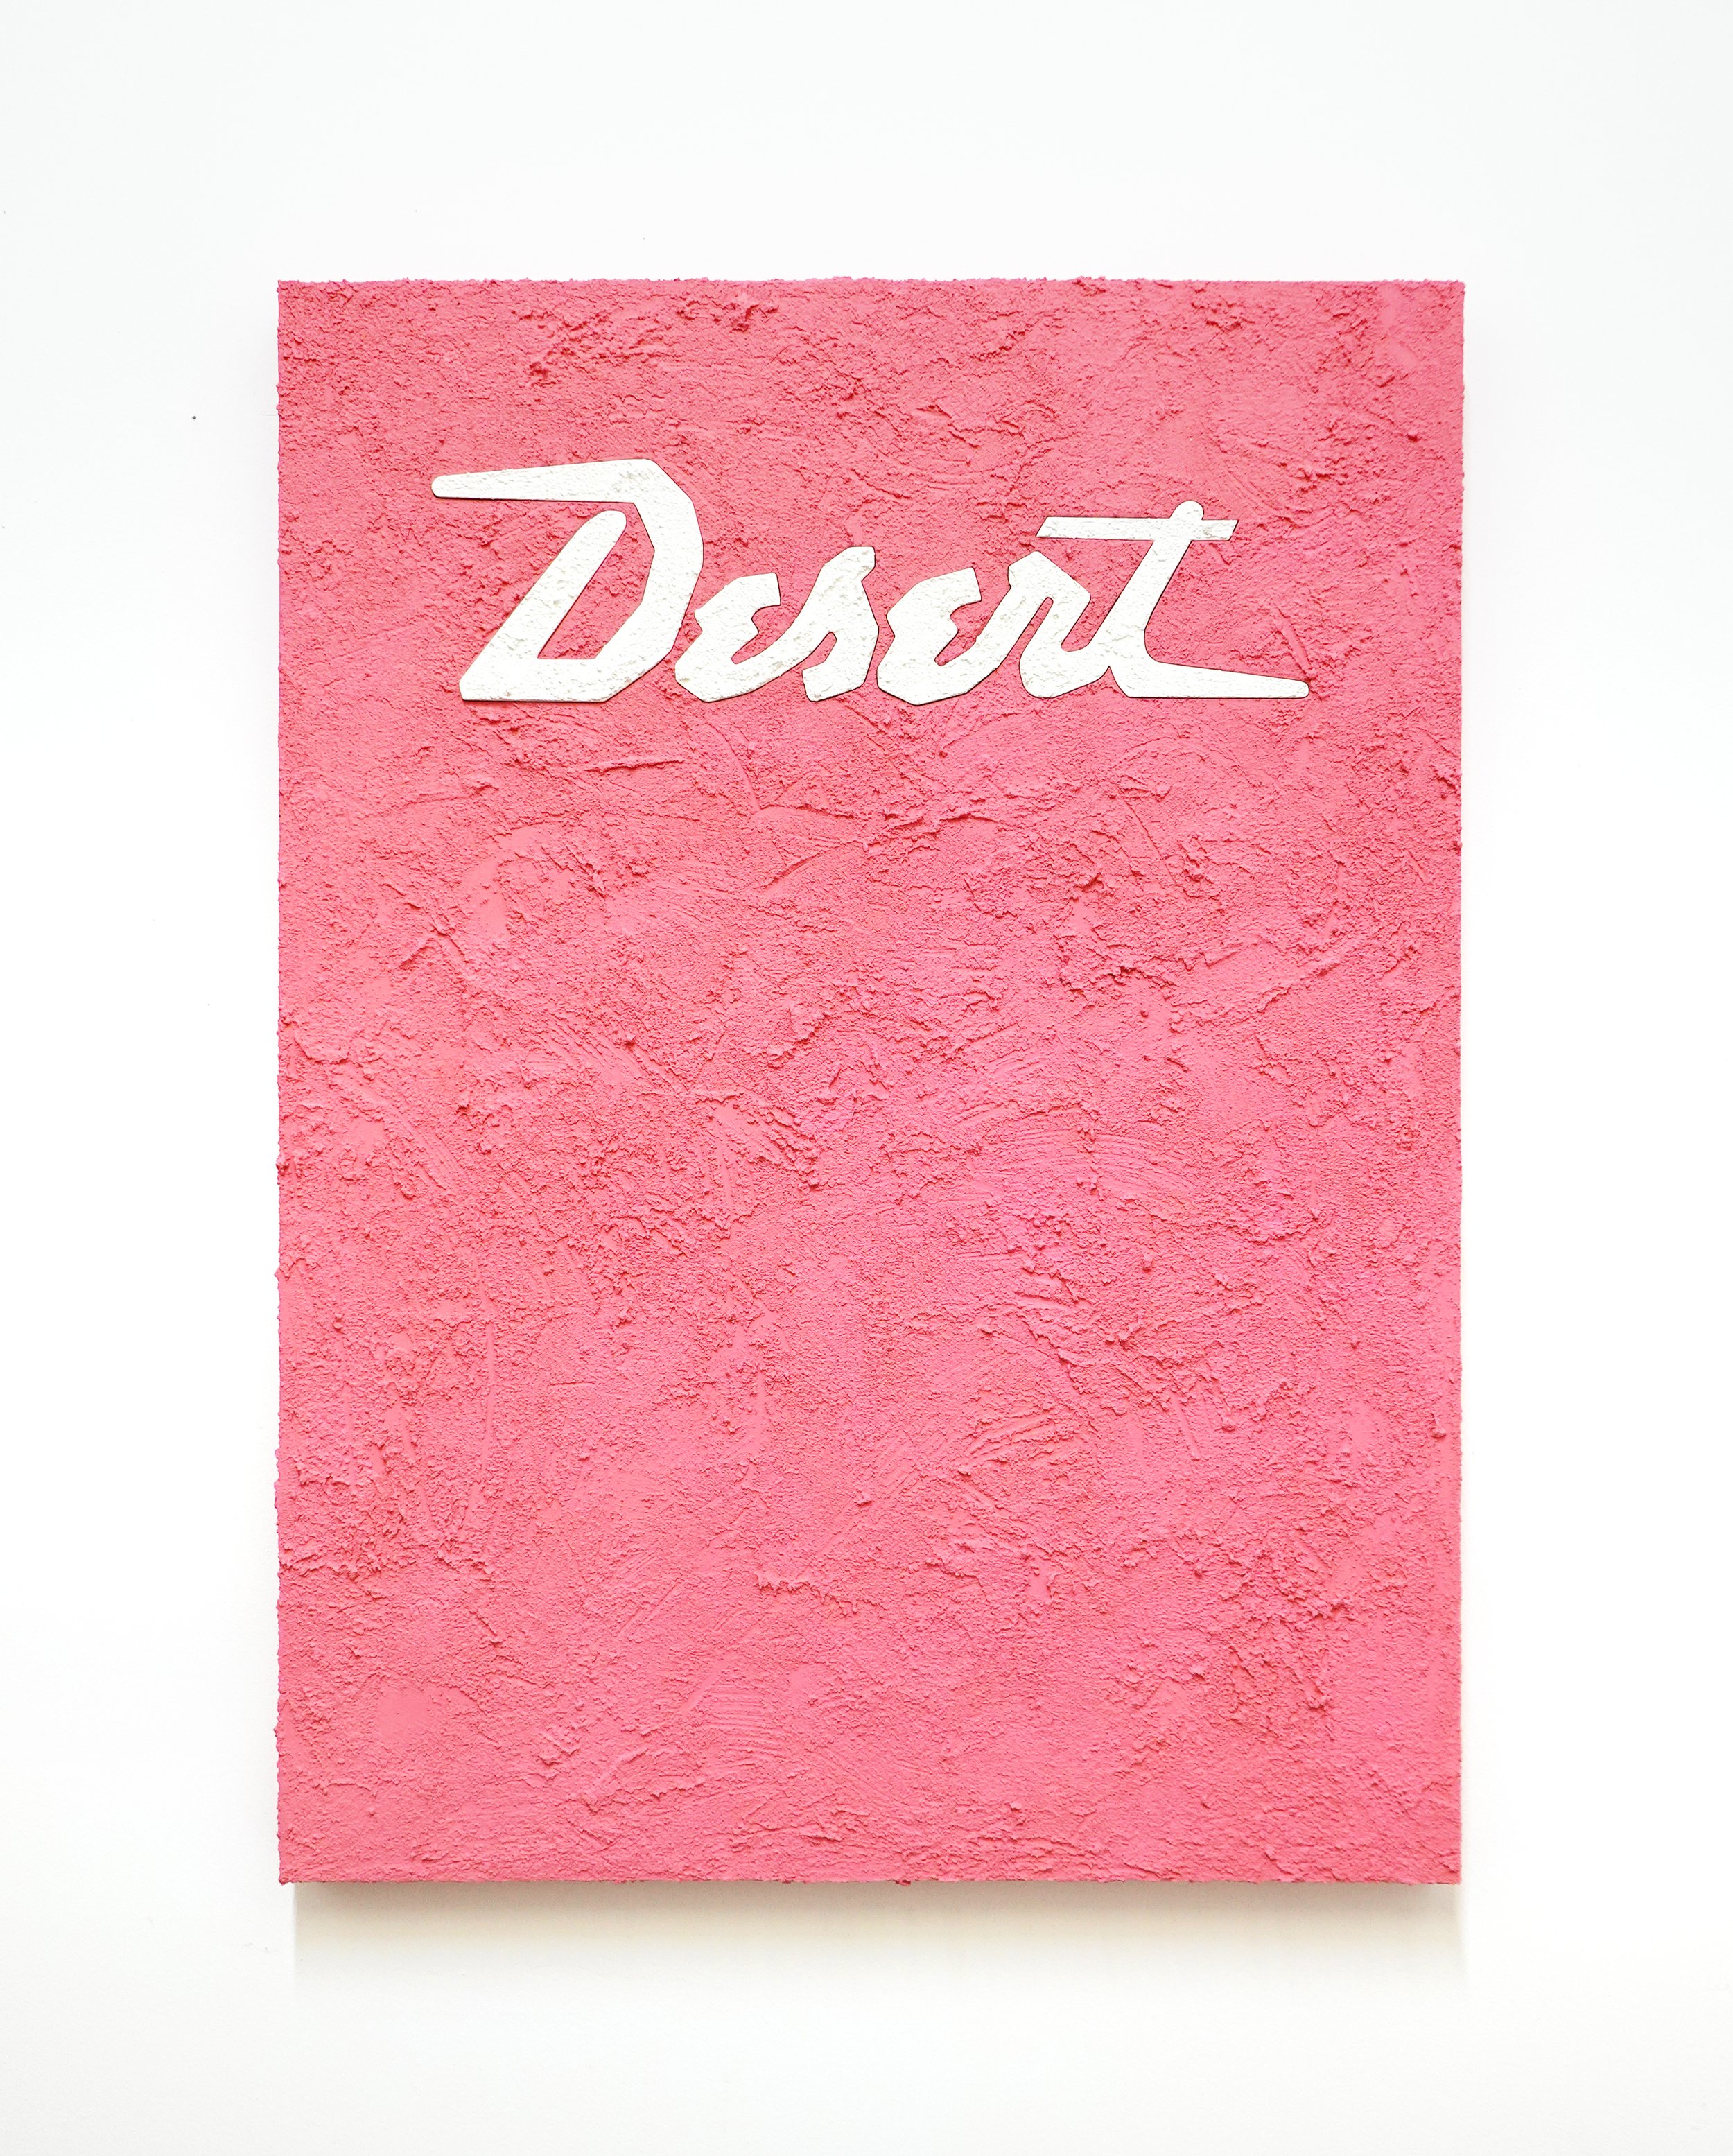  Desert dream monolith, 2023, stucco and acrylic on wood, 24 x 18”  